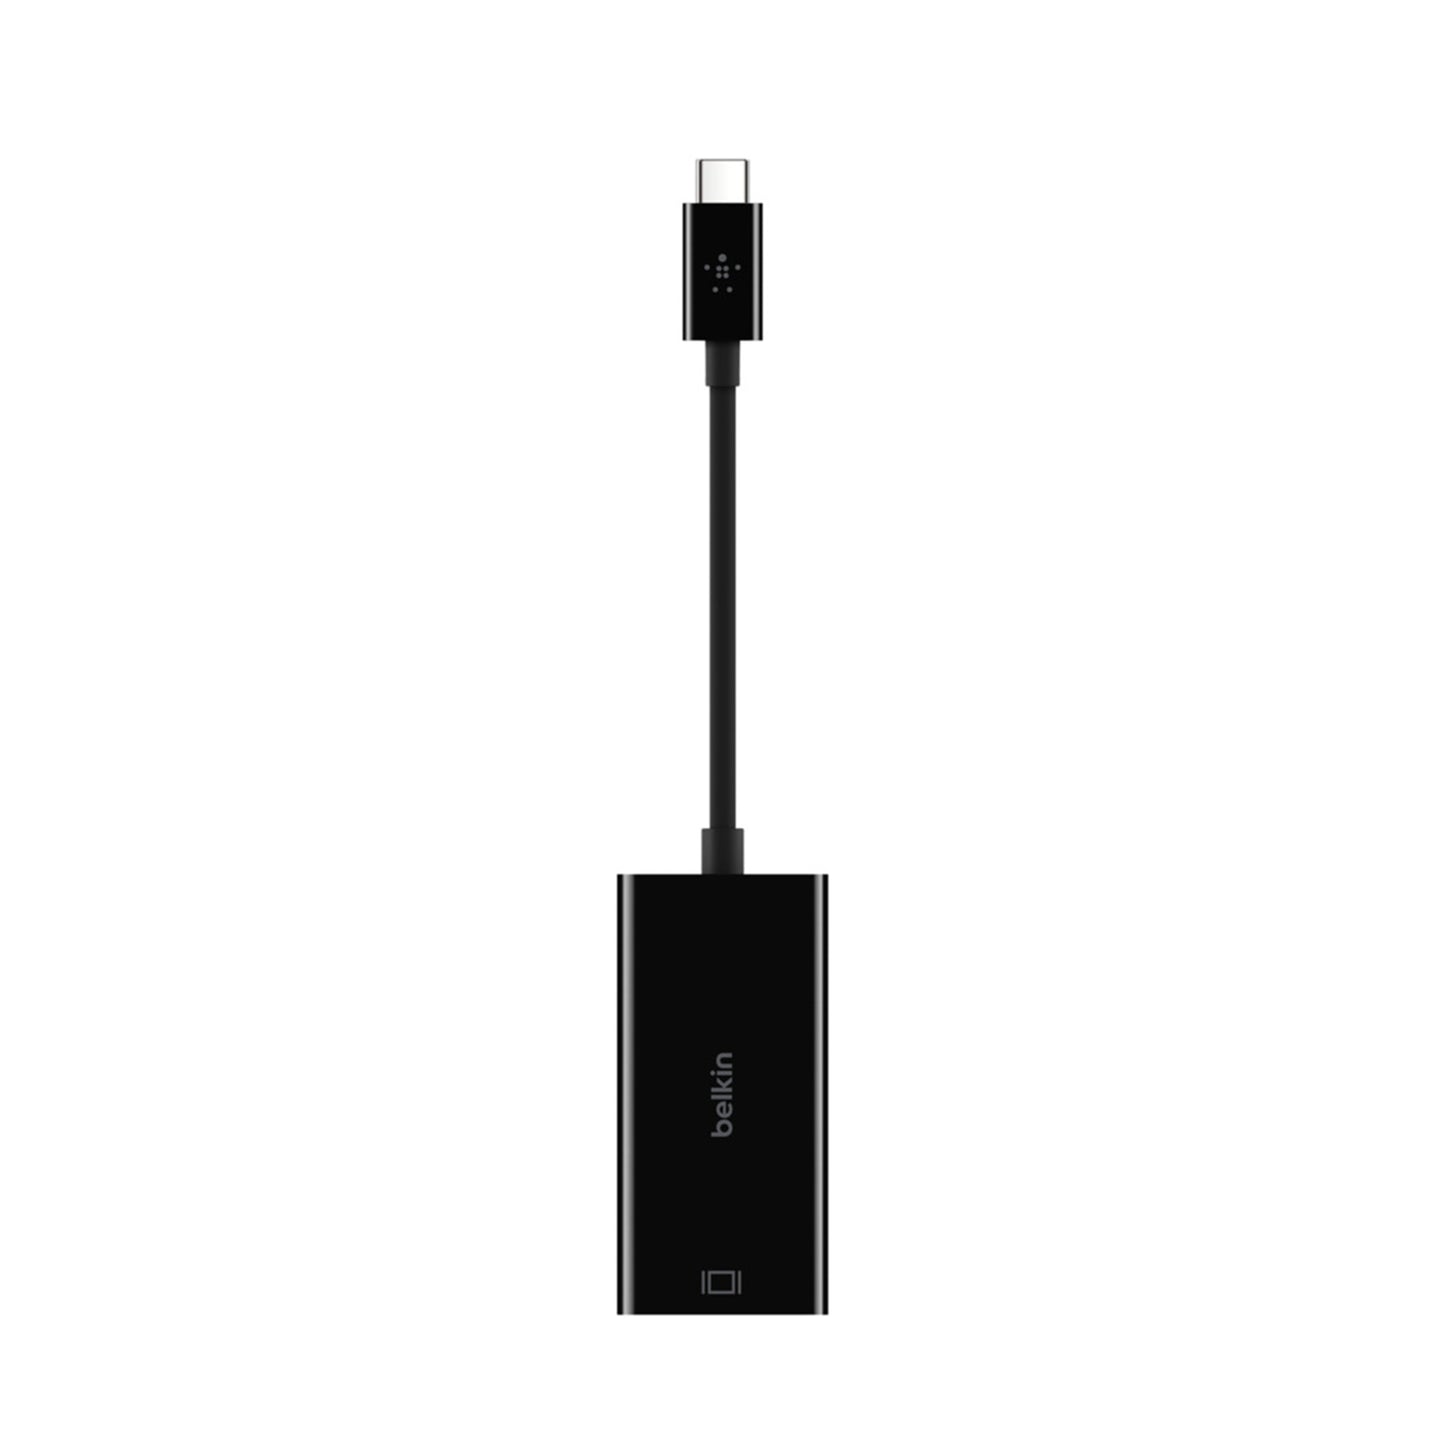 BELKIN USB-C to HDMI Adapter - Black